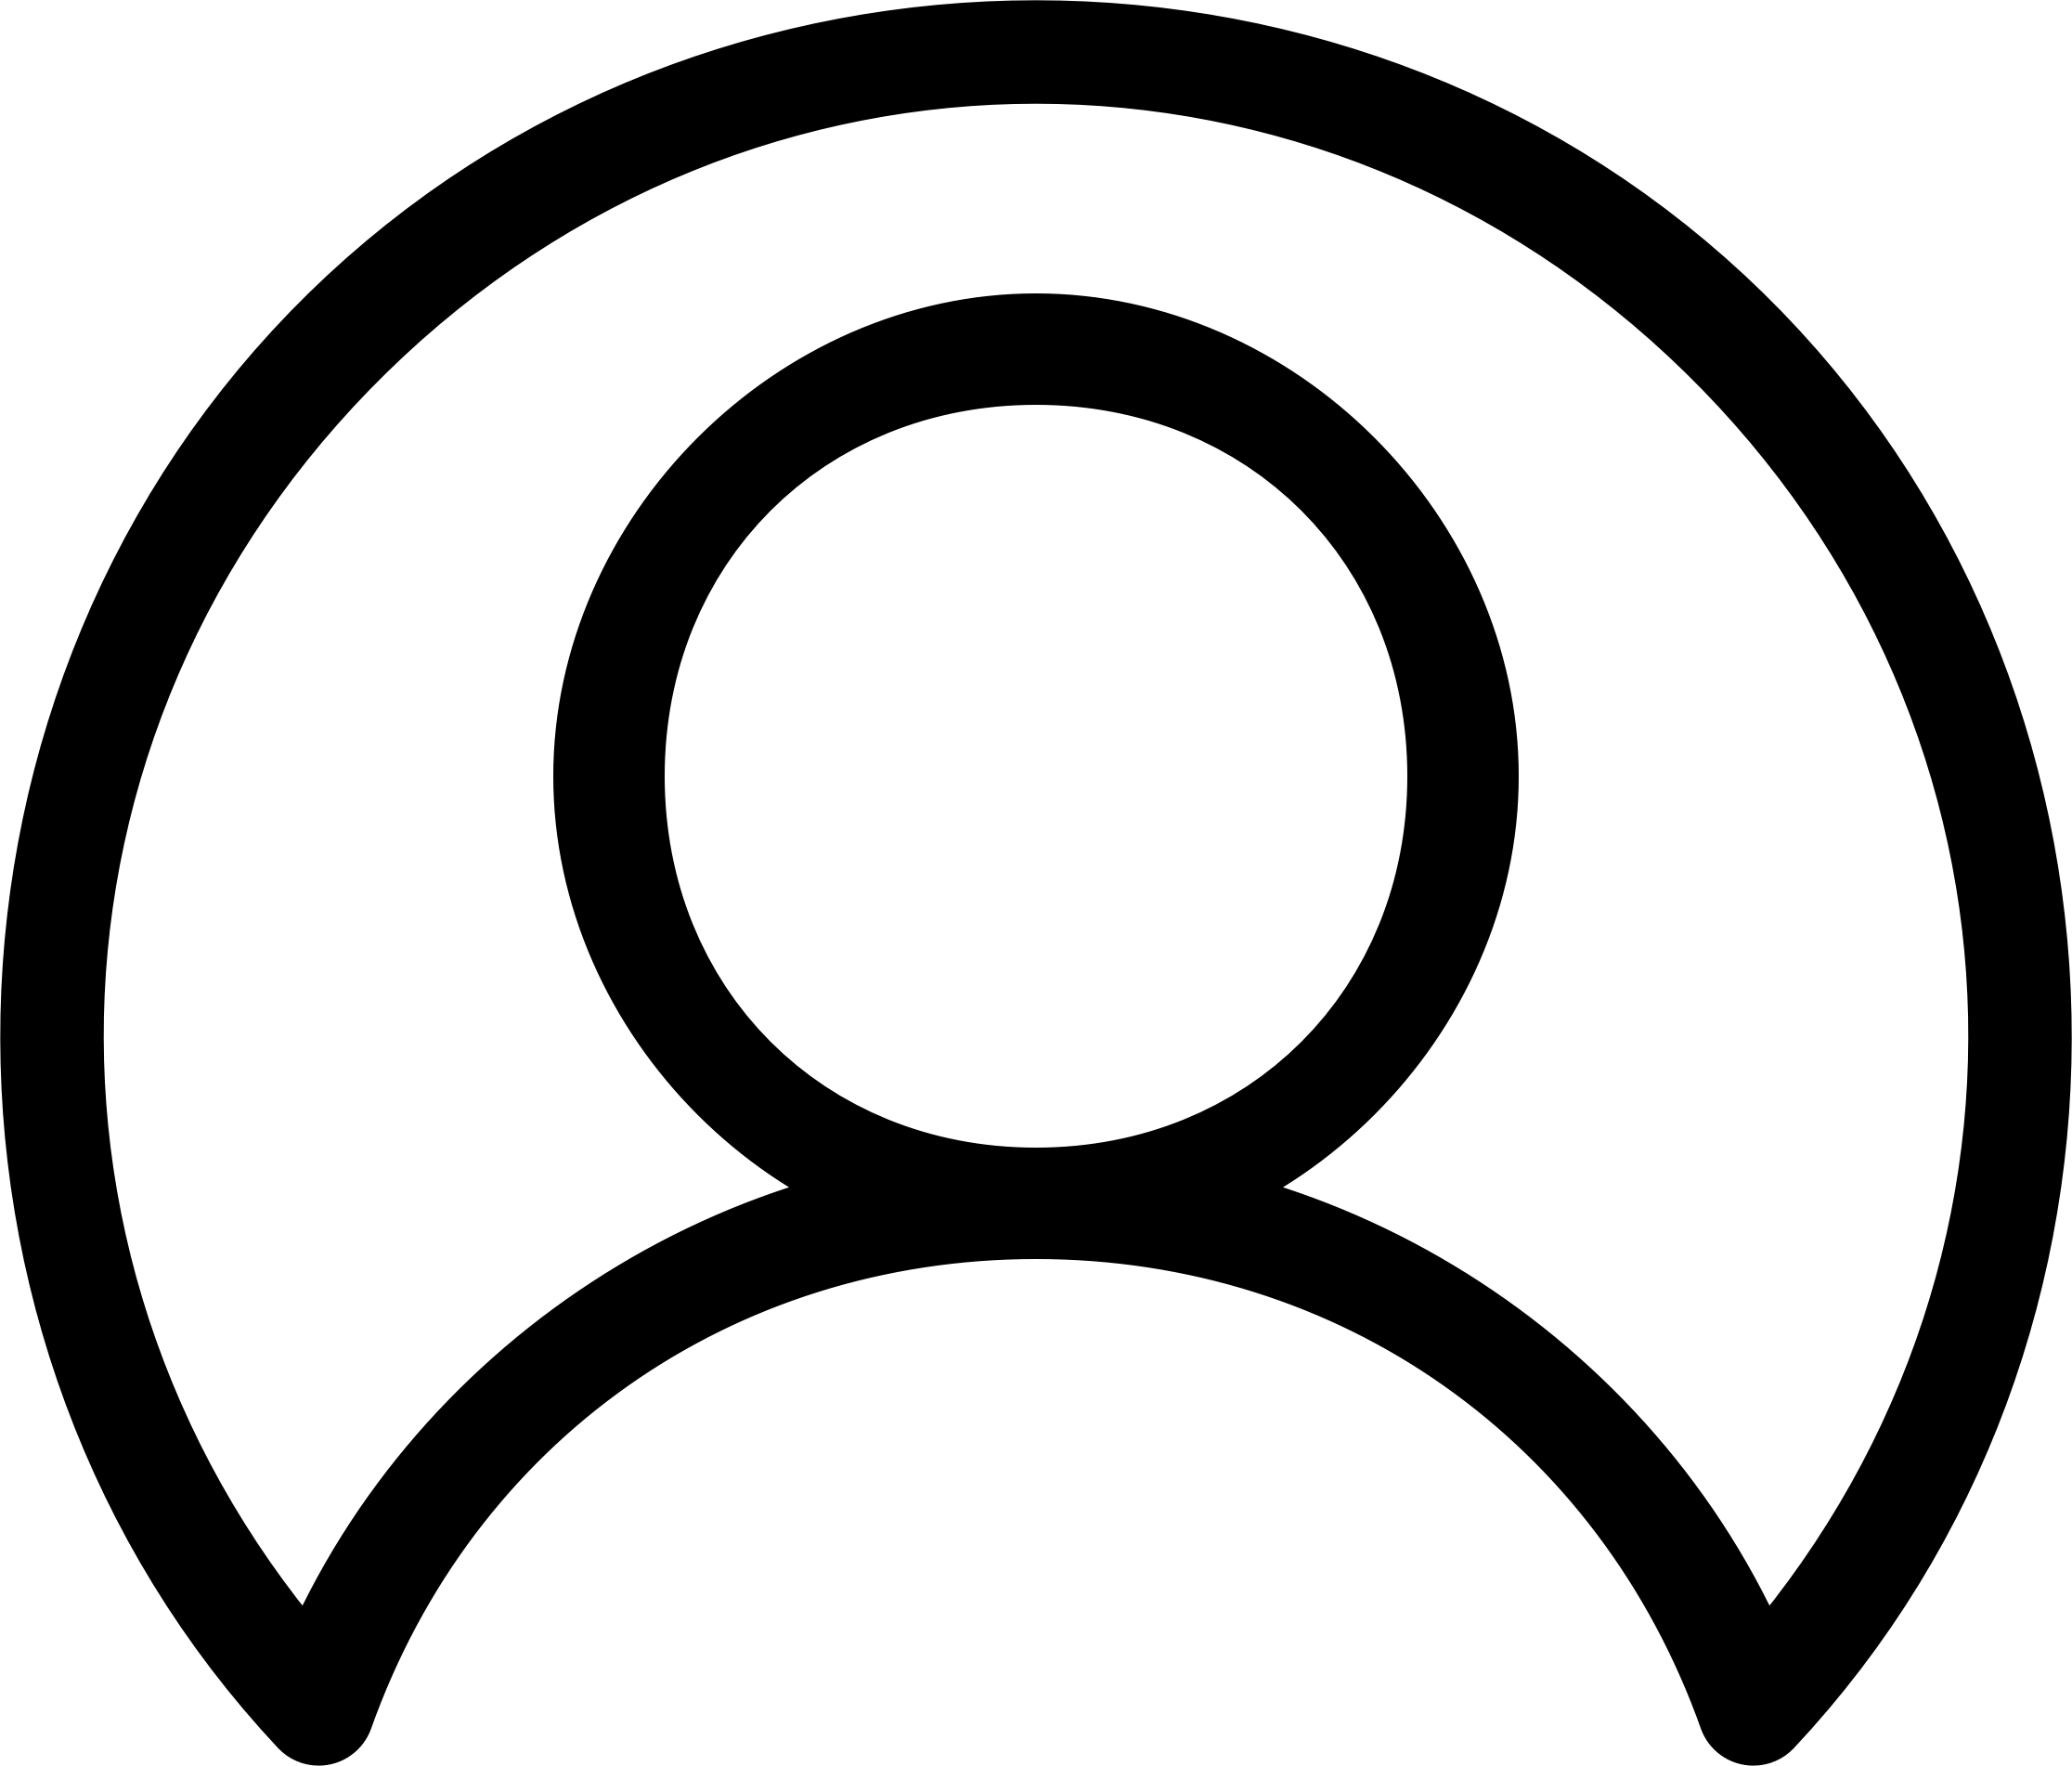 Circle,Clip art,Symbol,Line art,Black-and-white,Oval